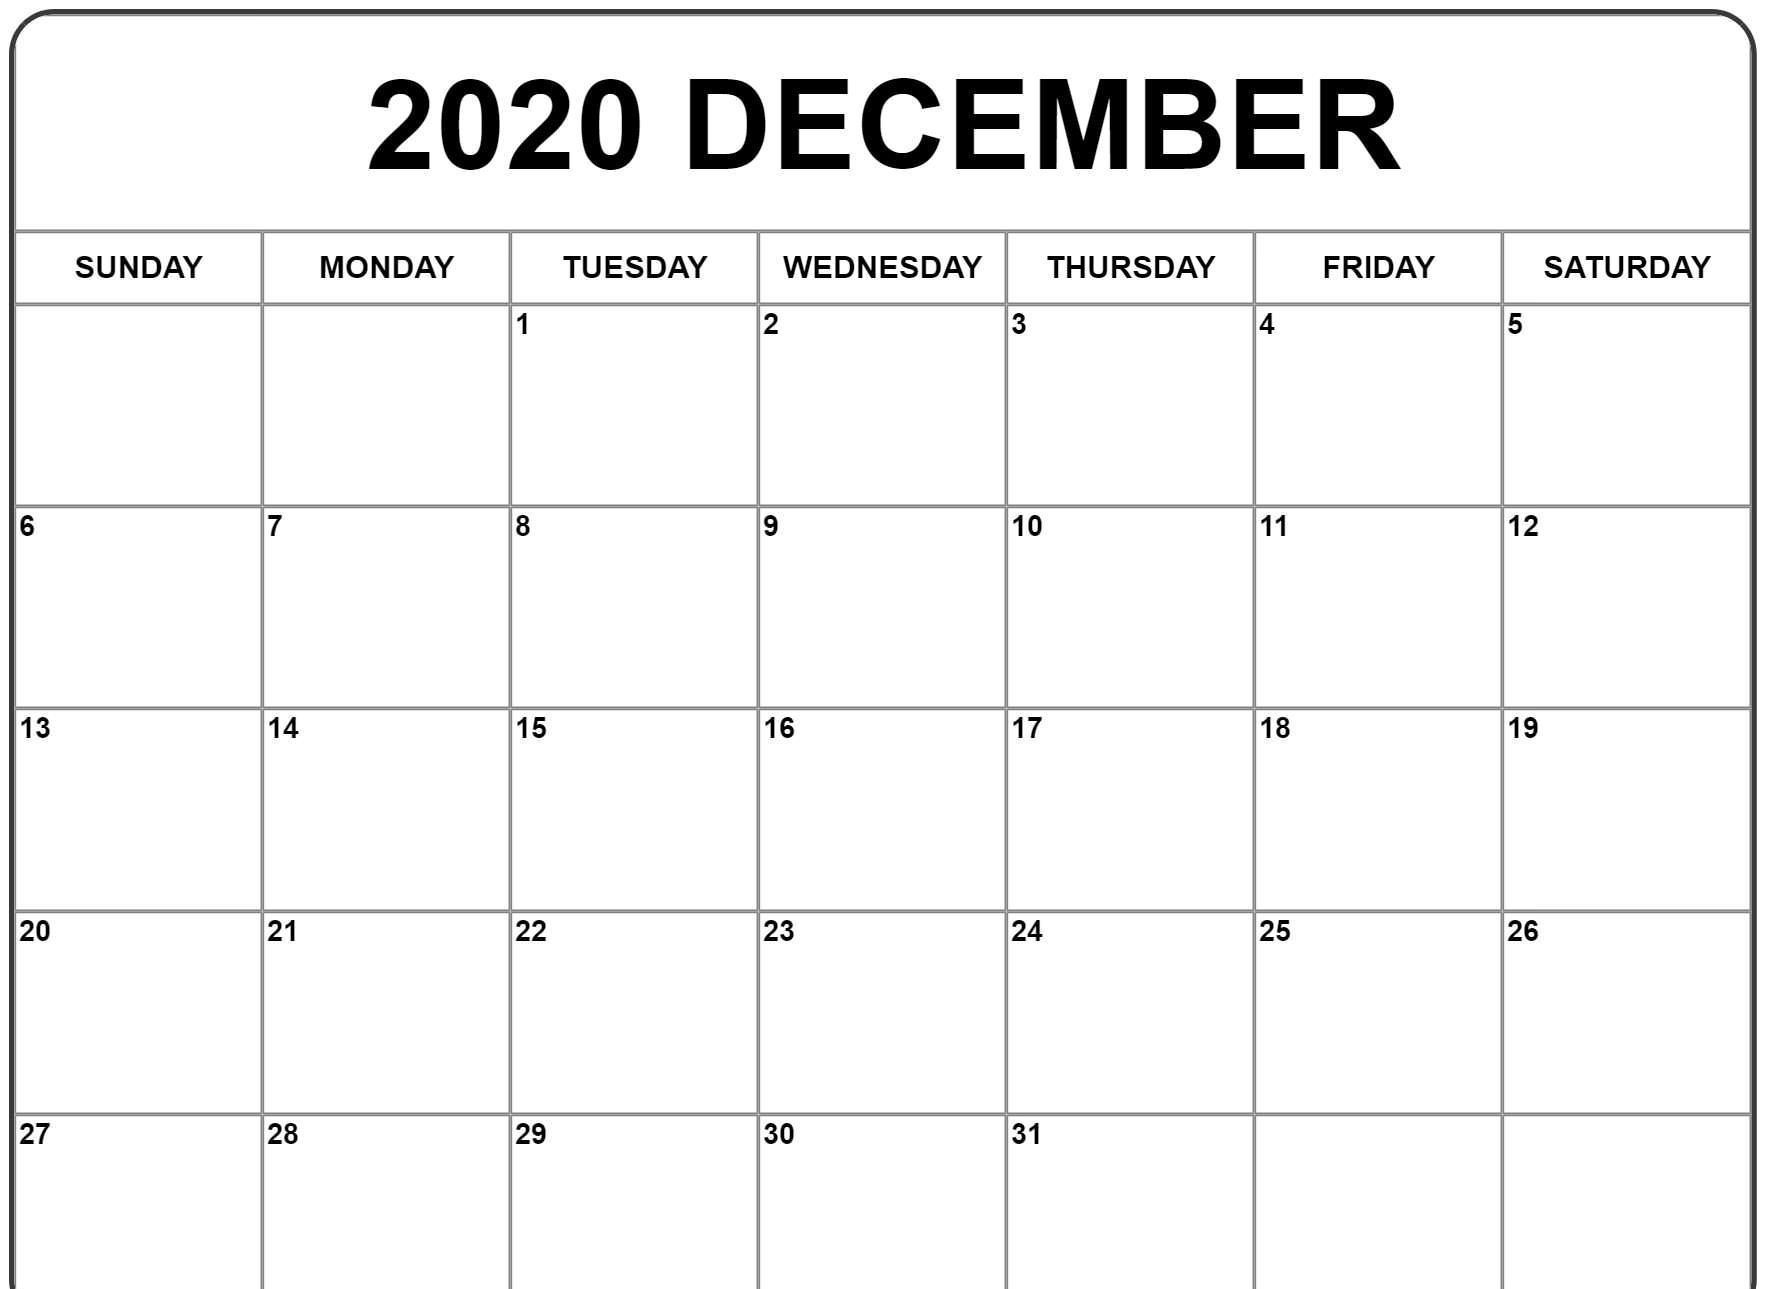 Free Printable December Calendar 2020 Templates Pdf, Word, Excel In 2020 | Calendar Word December 2020 January 2021 Calendar Word